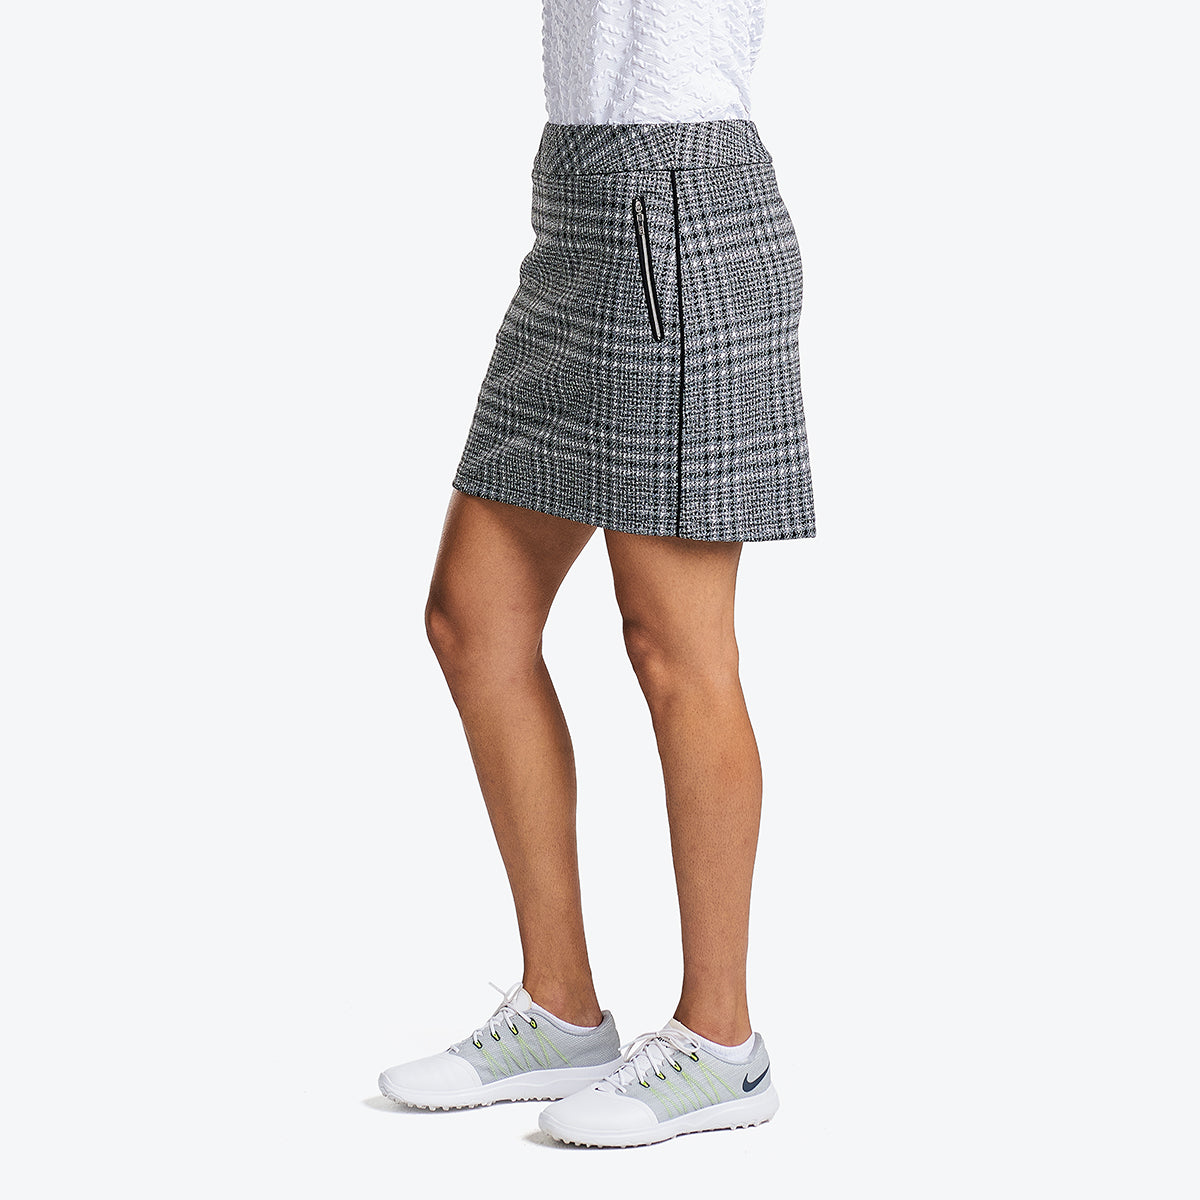 MARIKA Mona Capri - Shorts Women's, Buy online